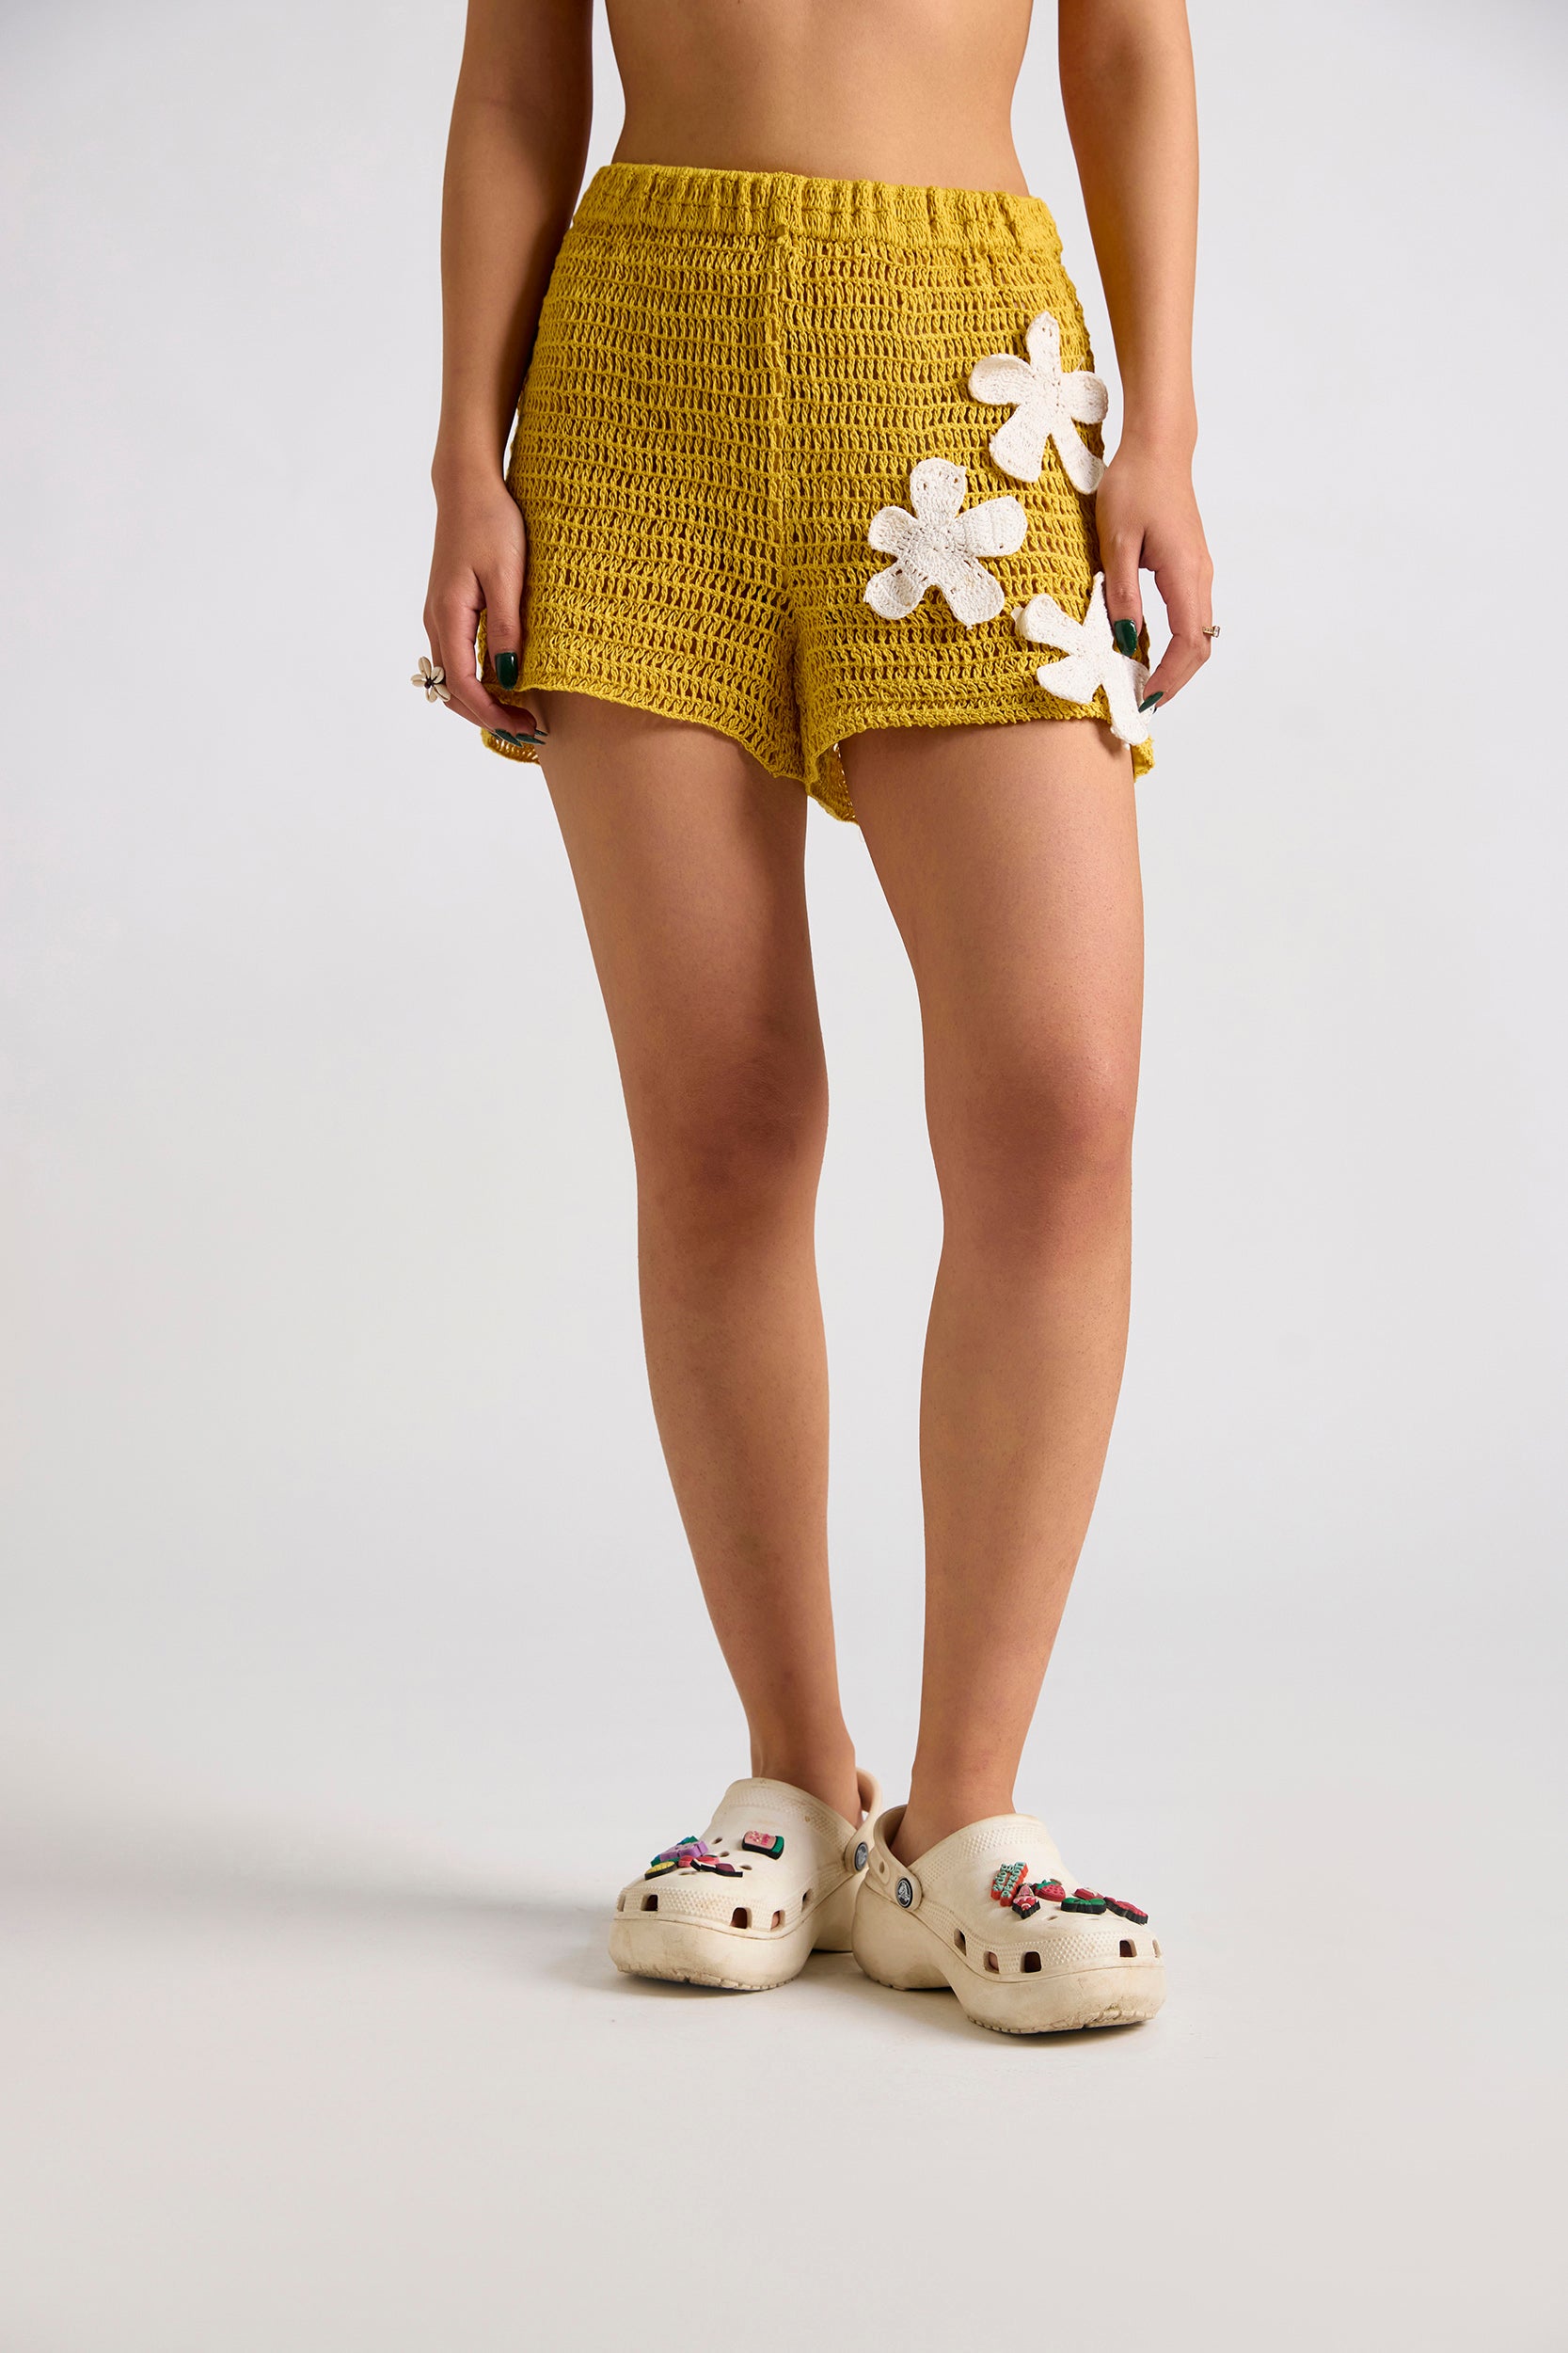 Spongebob inspired Crocheted Bralette Top  and Shorts Set